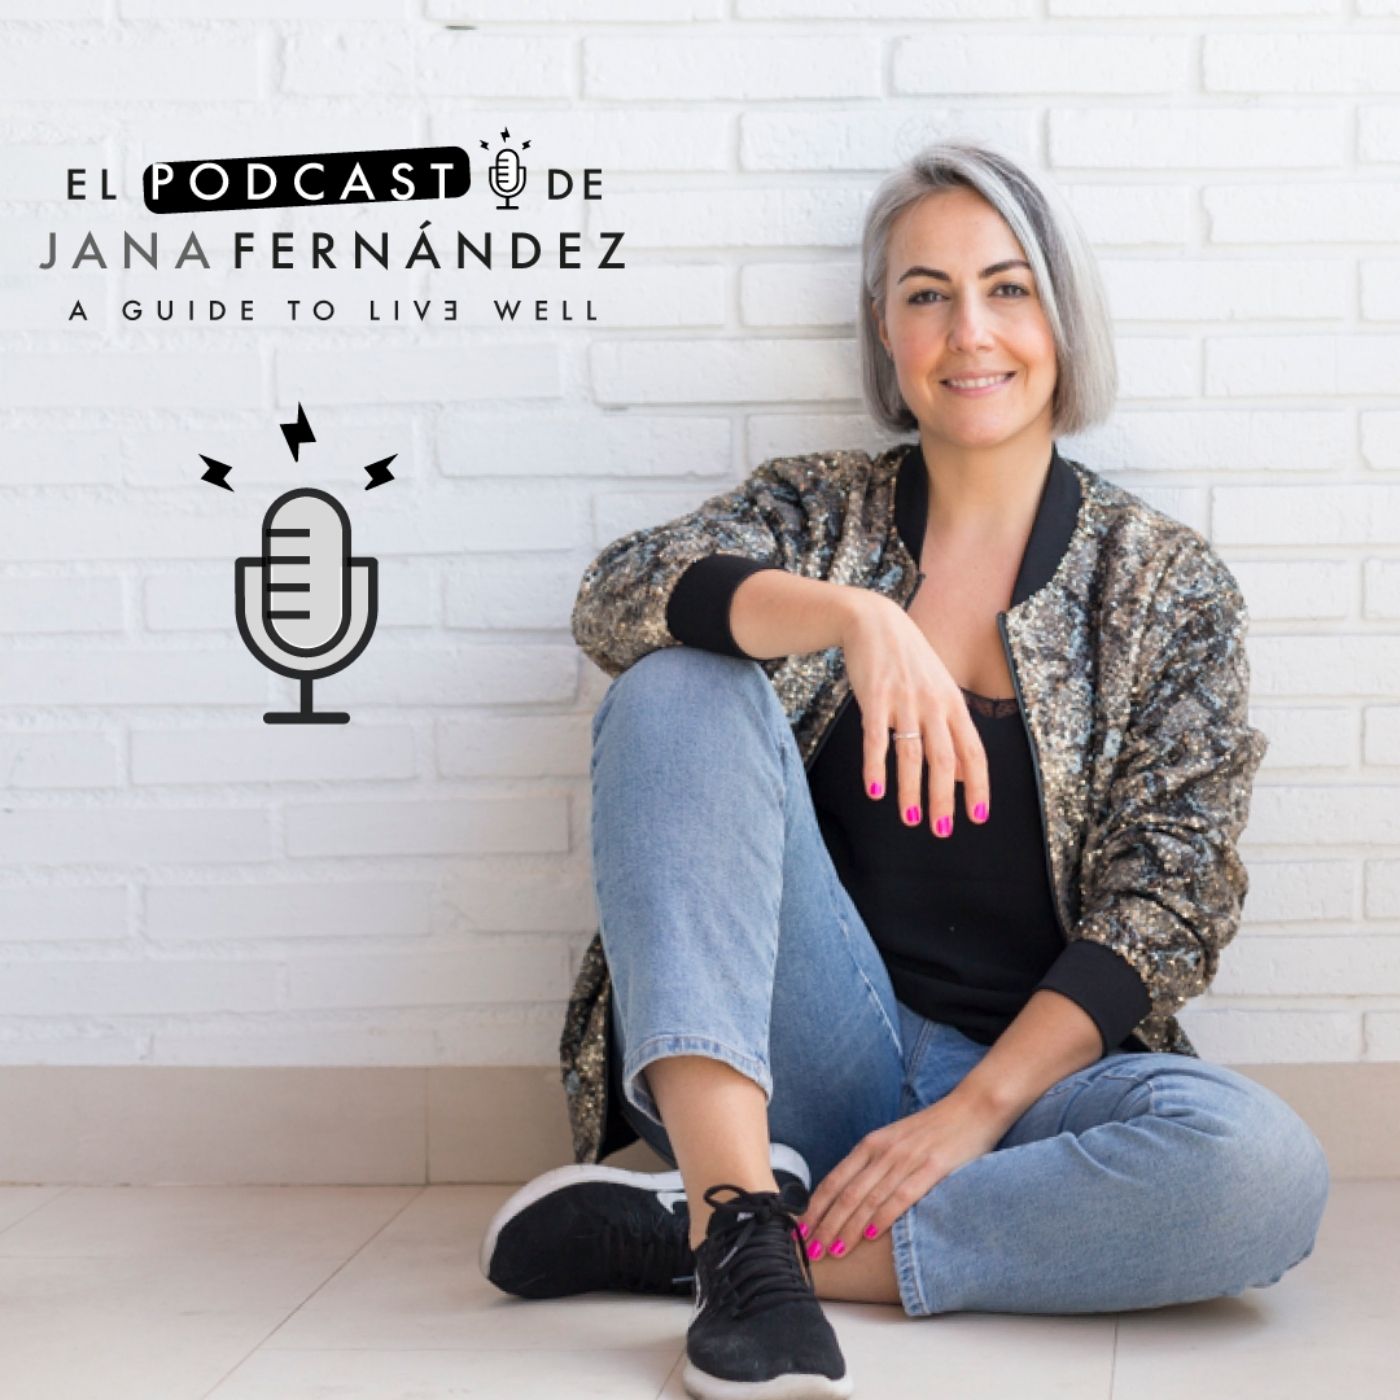 El podcast de Jana Fernández podcast